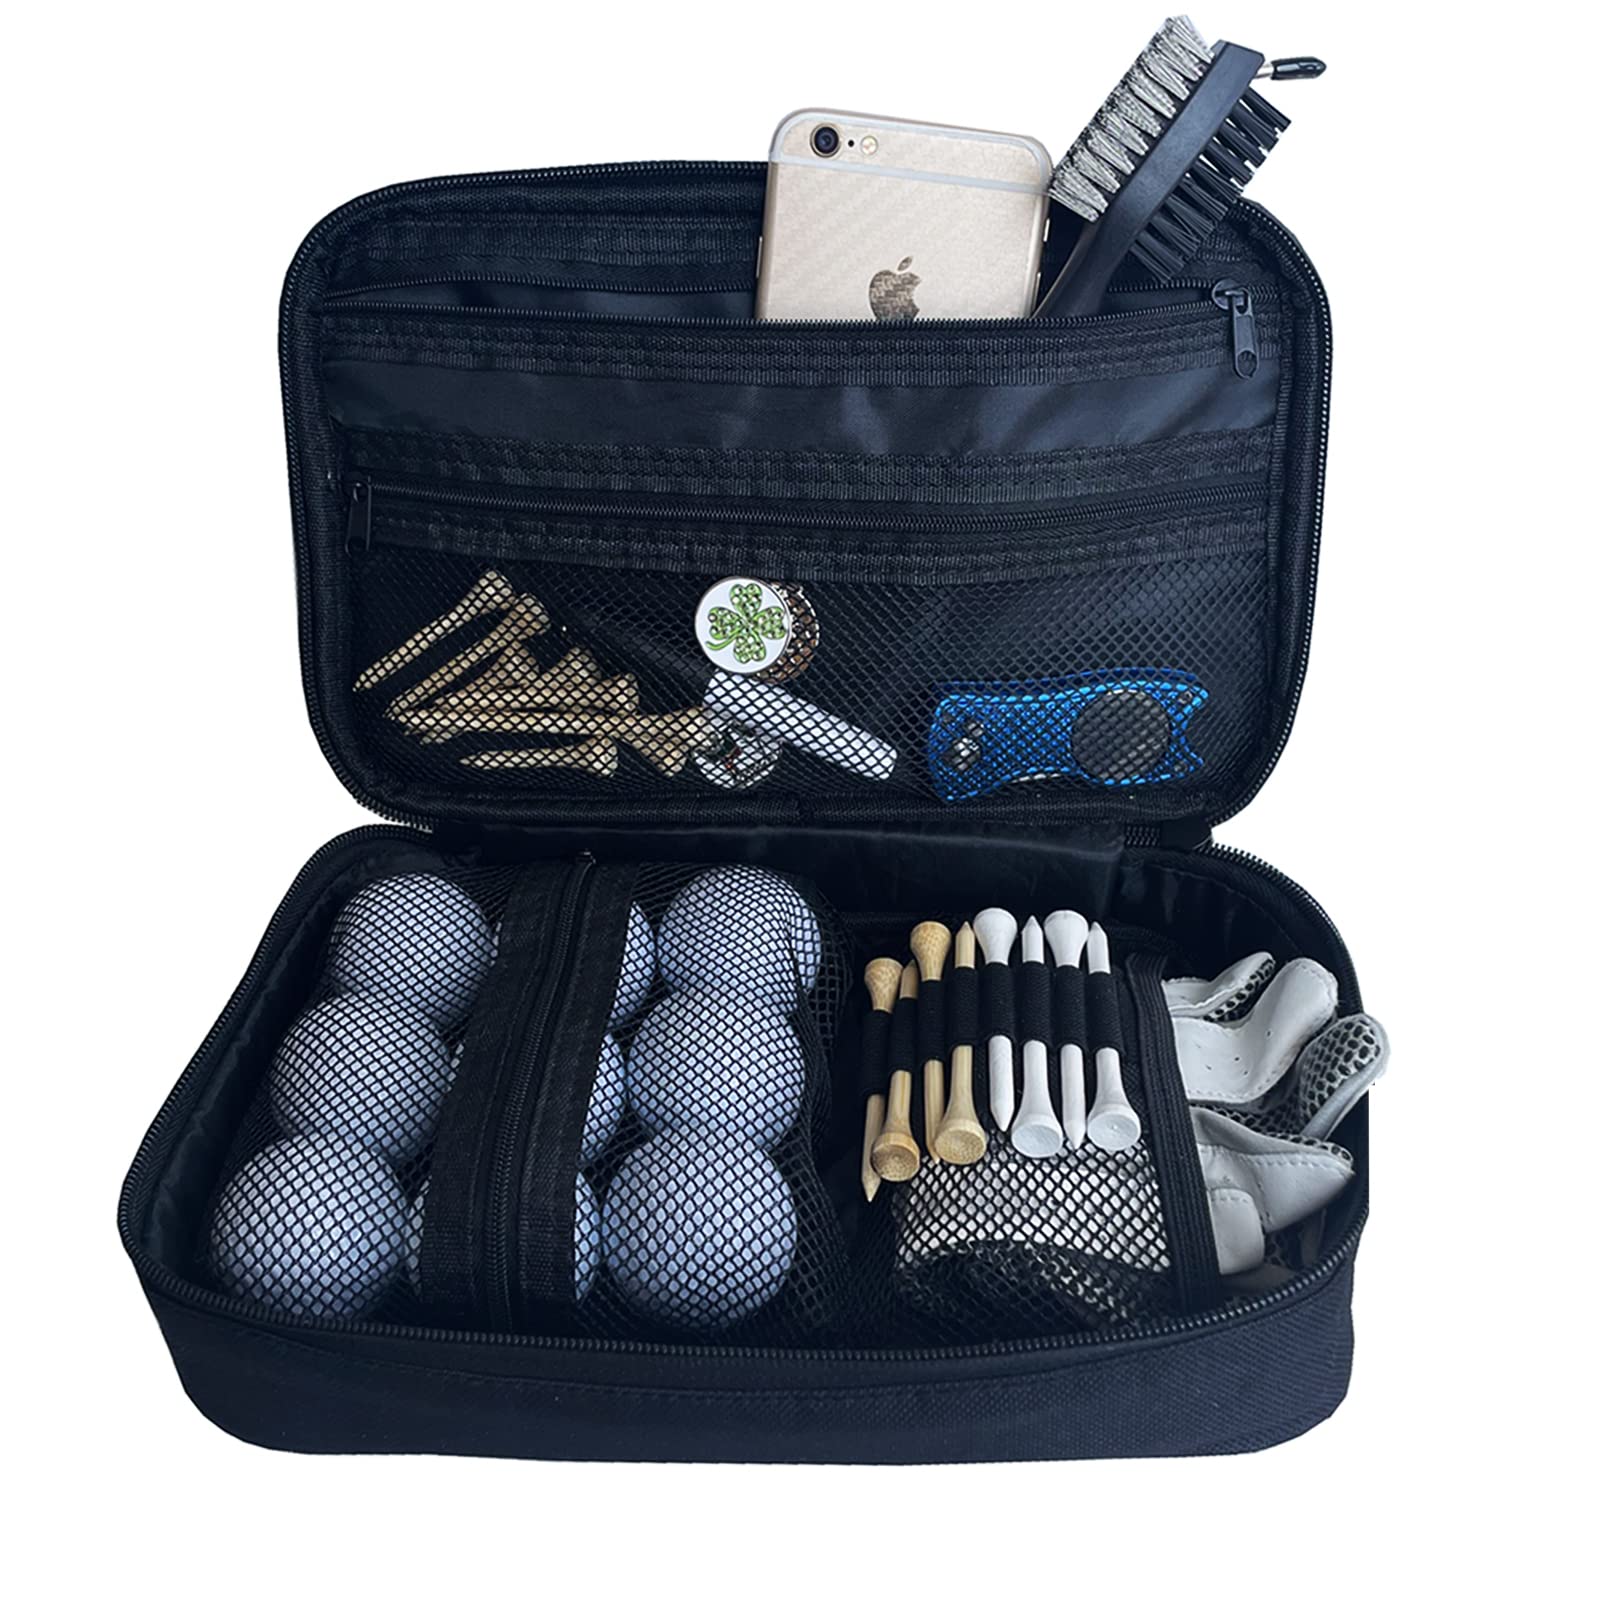 Golf Ball Bag Pouch,Golf Accessory Bag,Golf Accessories for Men